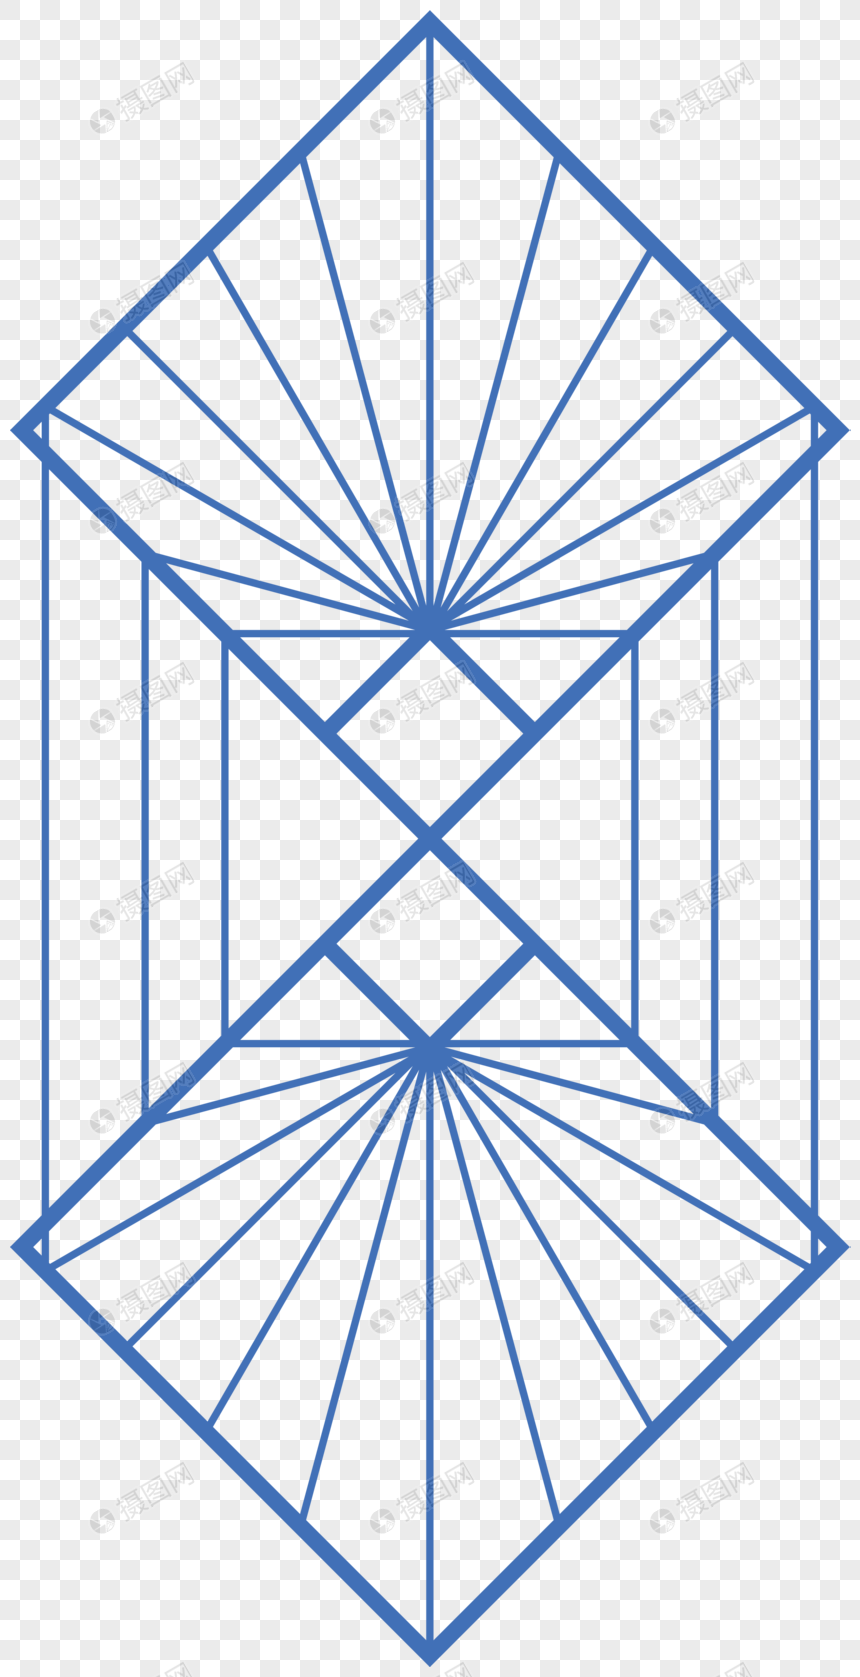 gambar geometris yang mudah - Teknoid